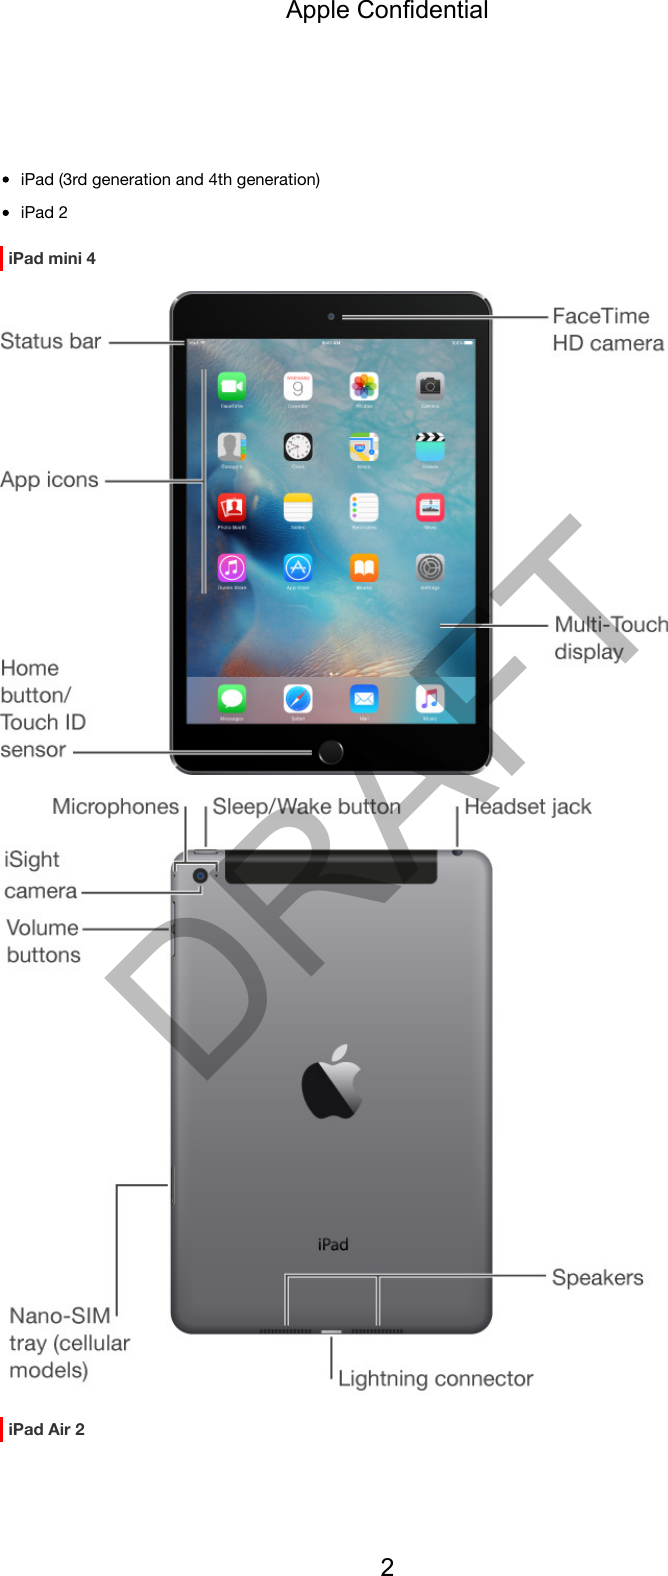 iPad (3rd generation and 4th generation)iPad 2iPad mini 4iPad Air 2Apple Confidential2DRAFT